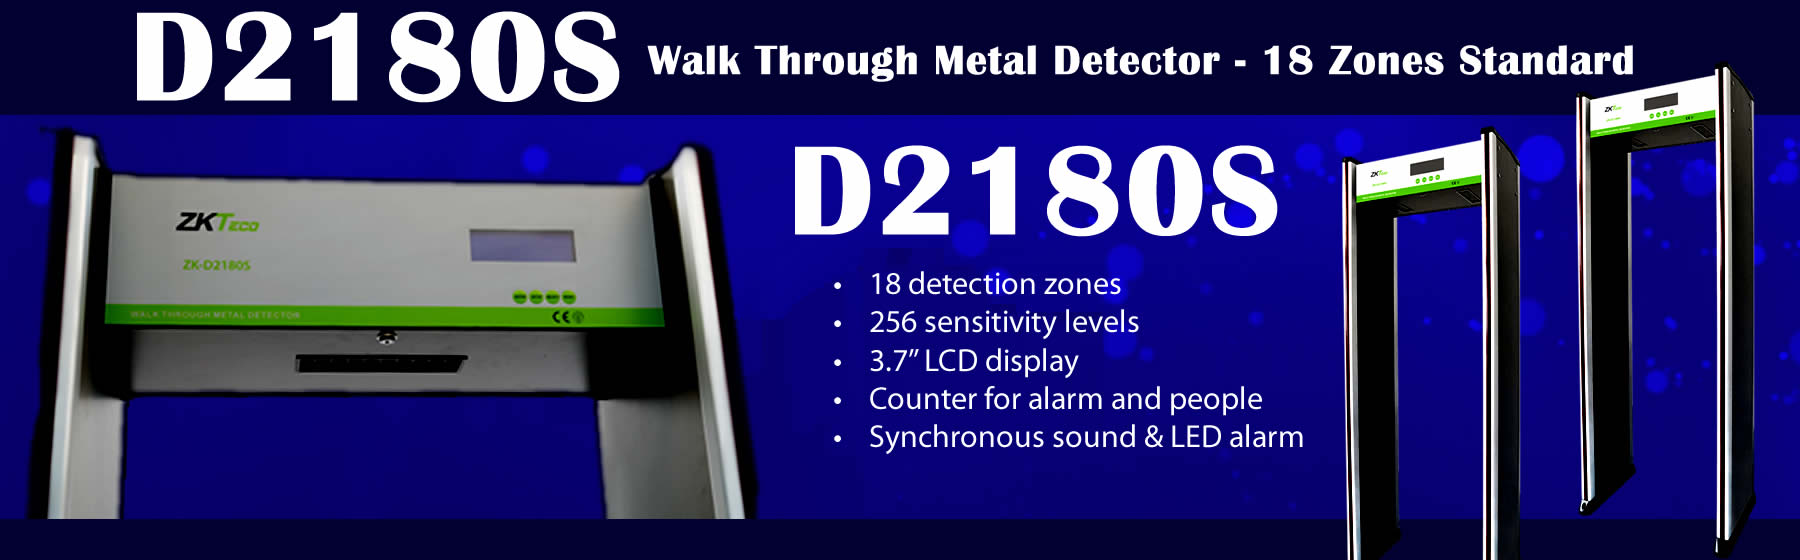 WMD218 Walk Through Metal Detector banner